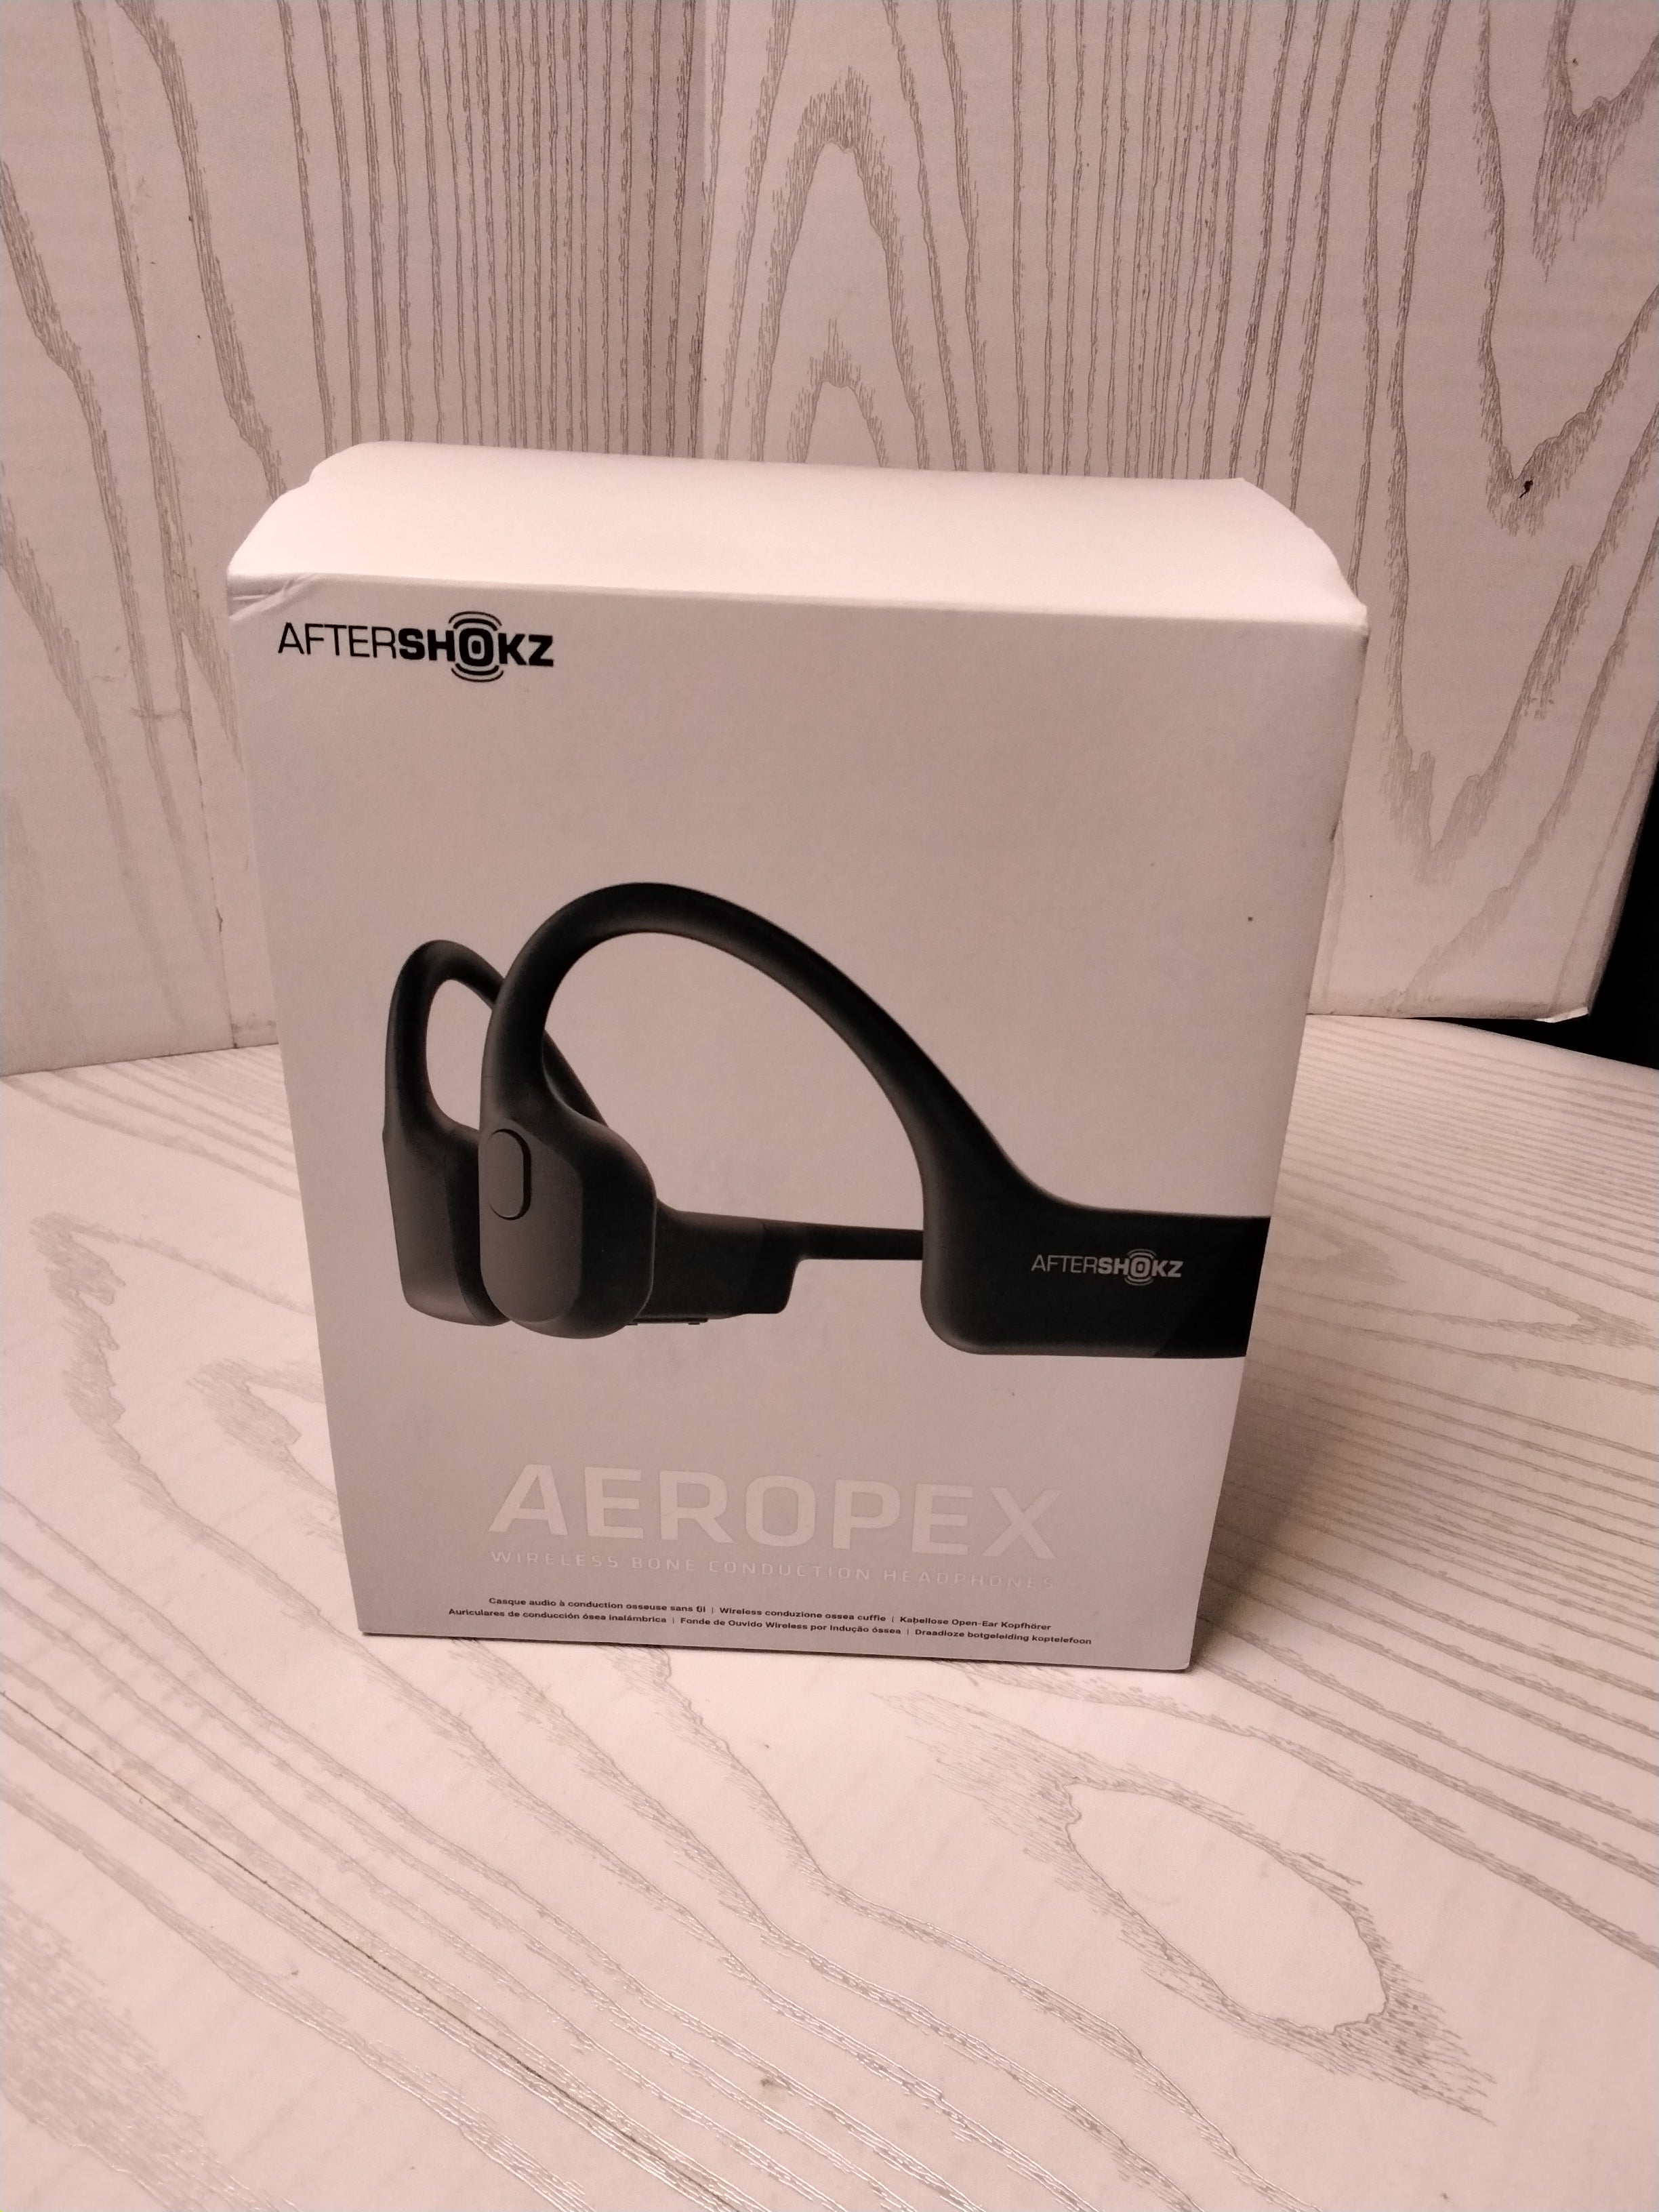 AfterShokz Aeropex - Open-Ear Bluetooth Bone Conduction Headphones, Cosmic Black (7763700908270)